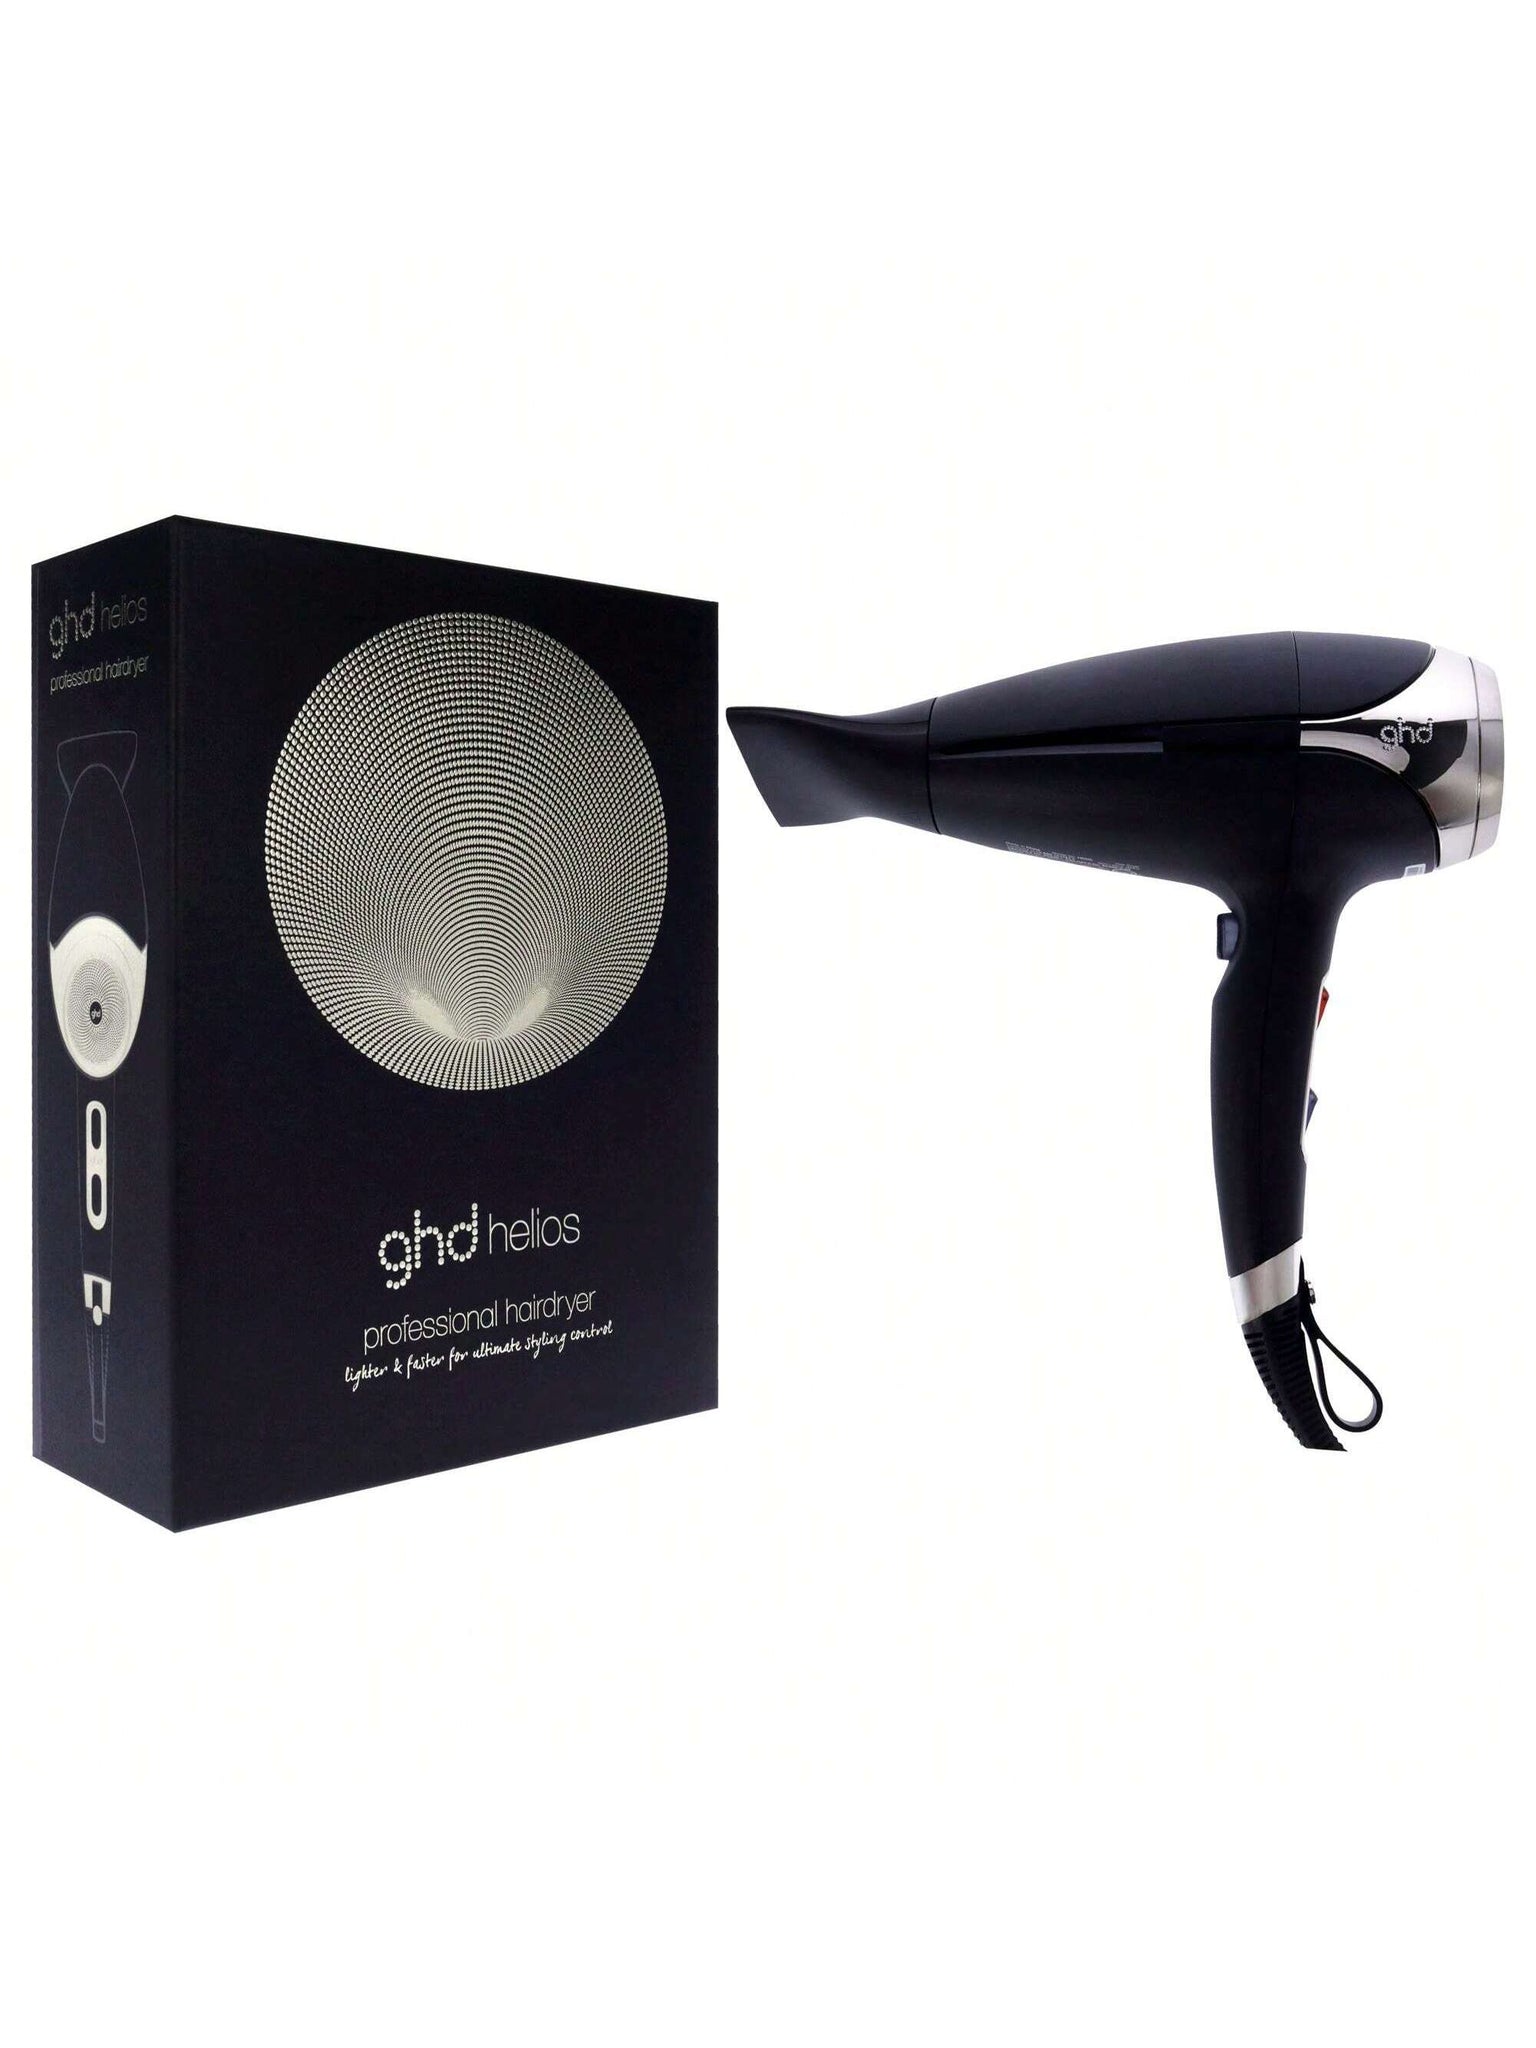 ghd GHD Helios 1875W Advanced Professional Hair Dryer - Black by GHD f –  vacpi